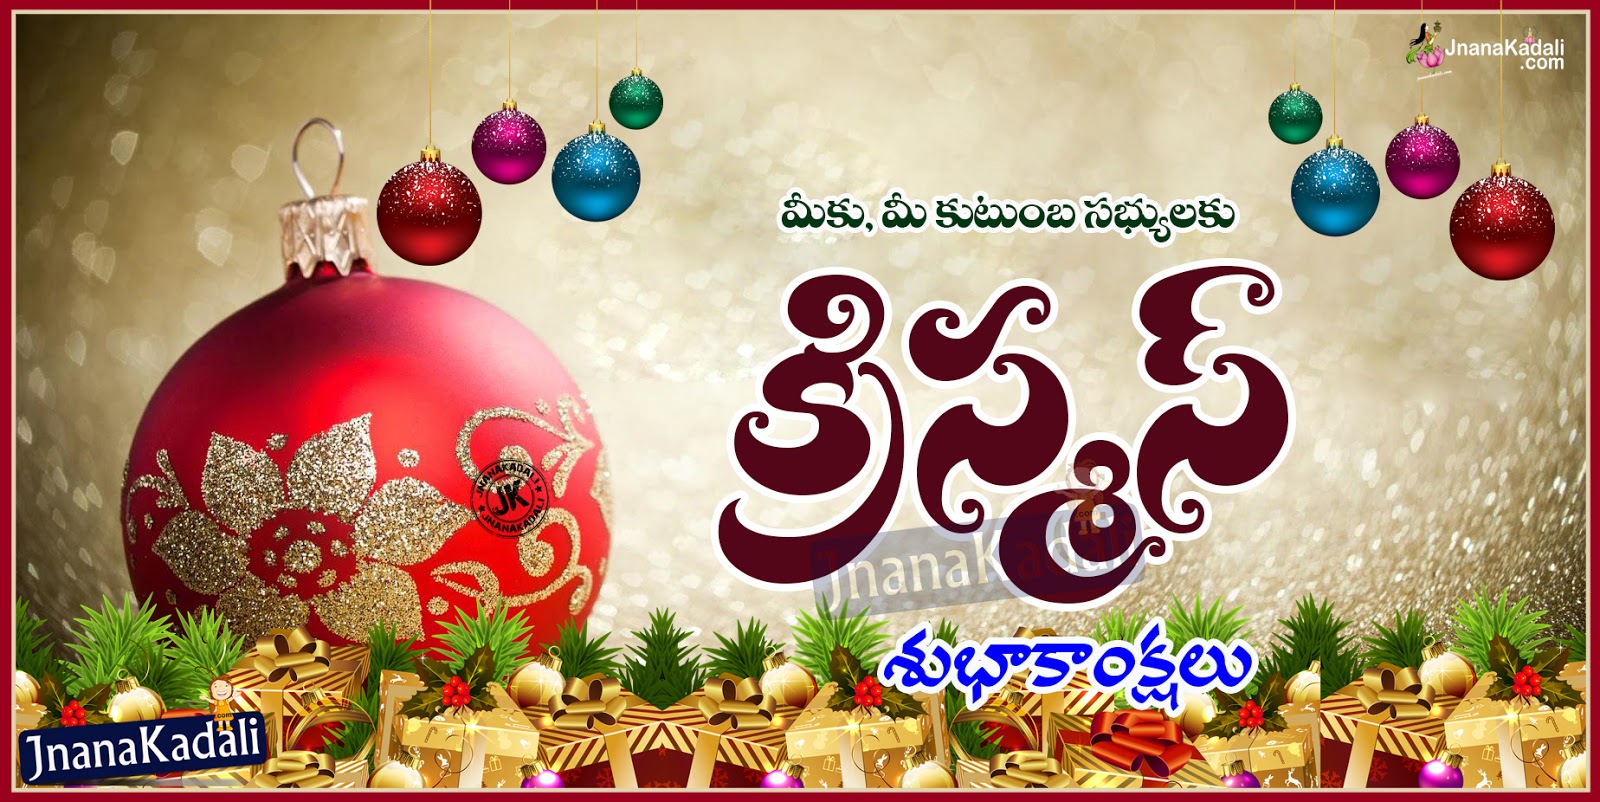 Telugu Best Christmas Greetings Quotations with Jesus Blessings | JNANA KADALI.COM |Telugu ...